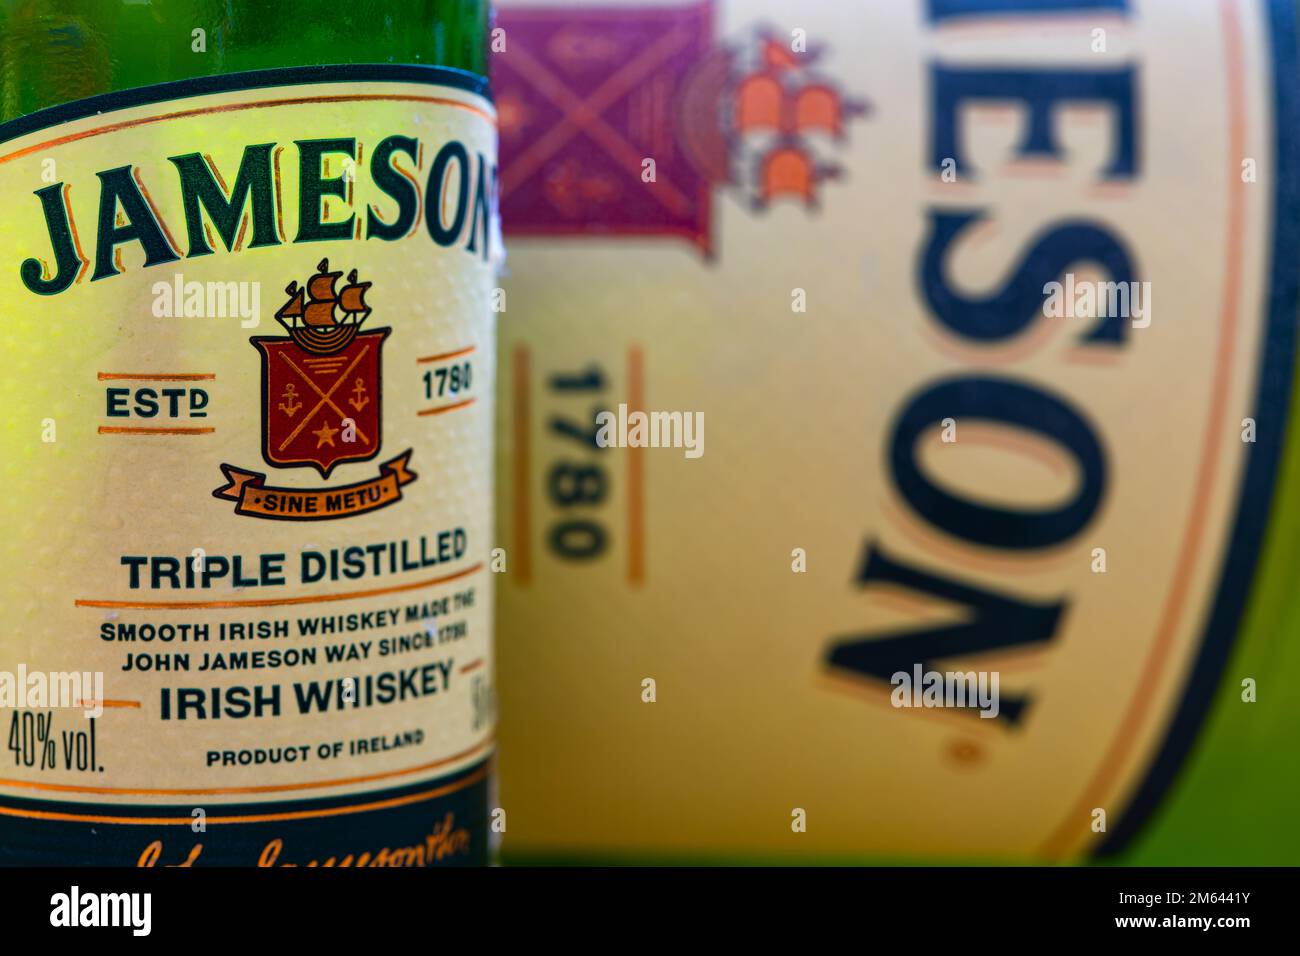 https://c8.alamy.com/comp/2M6441Y/dublin-ireland-december-24-2022-jameson-irish-whiskey-new-jameson-original-label-2M6441Y.jpg